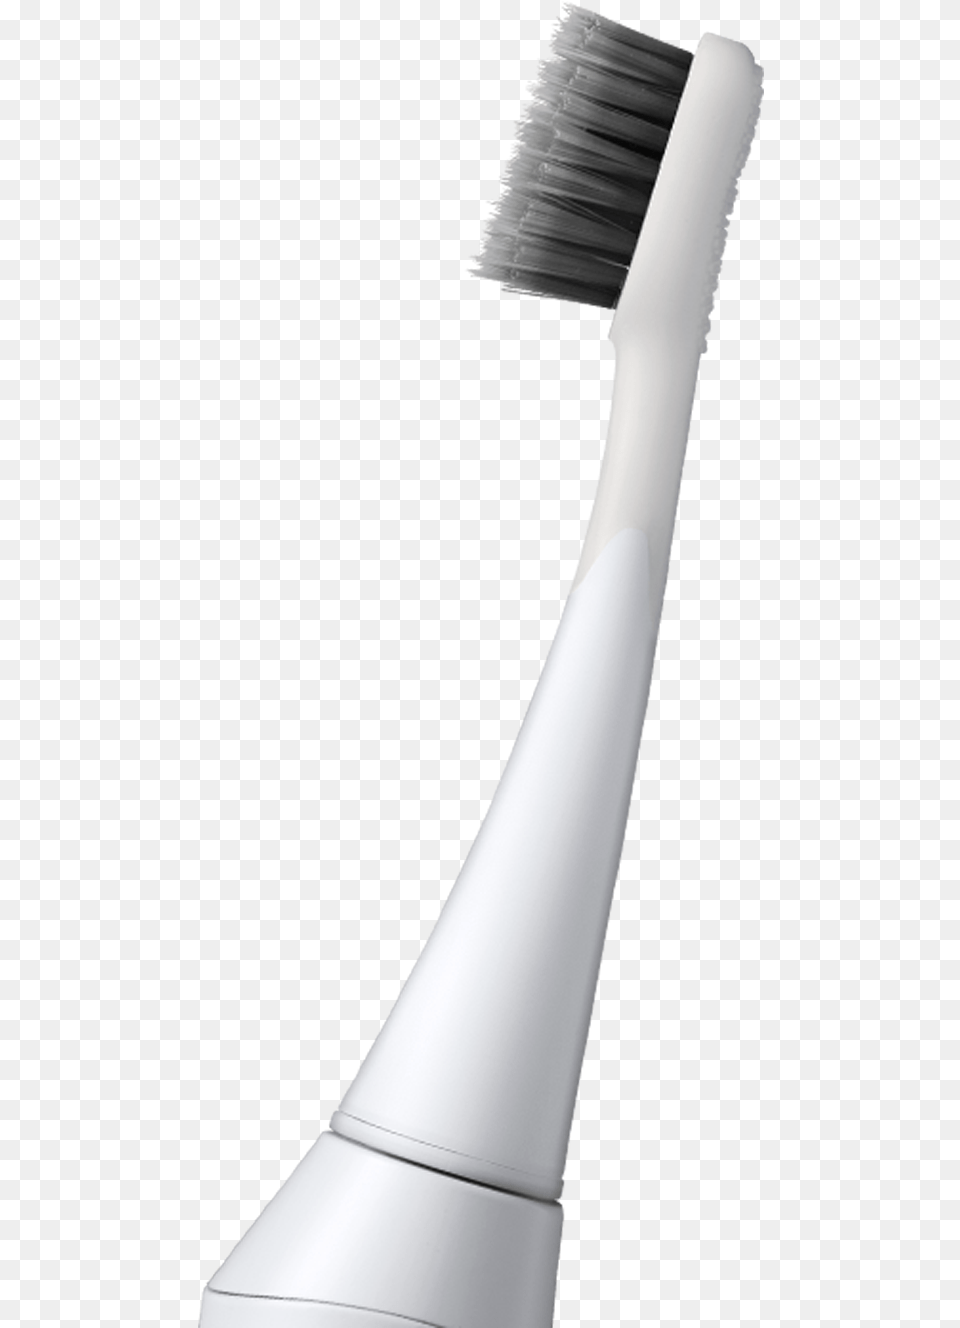 Makeup Brushes, Brush, Device, Tool, Toothbrush Png Image